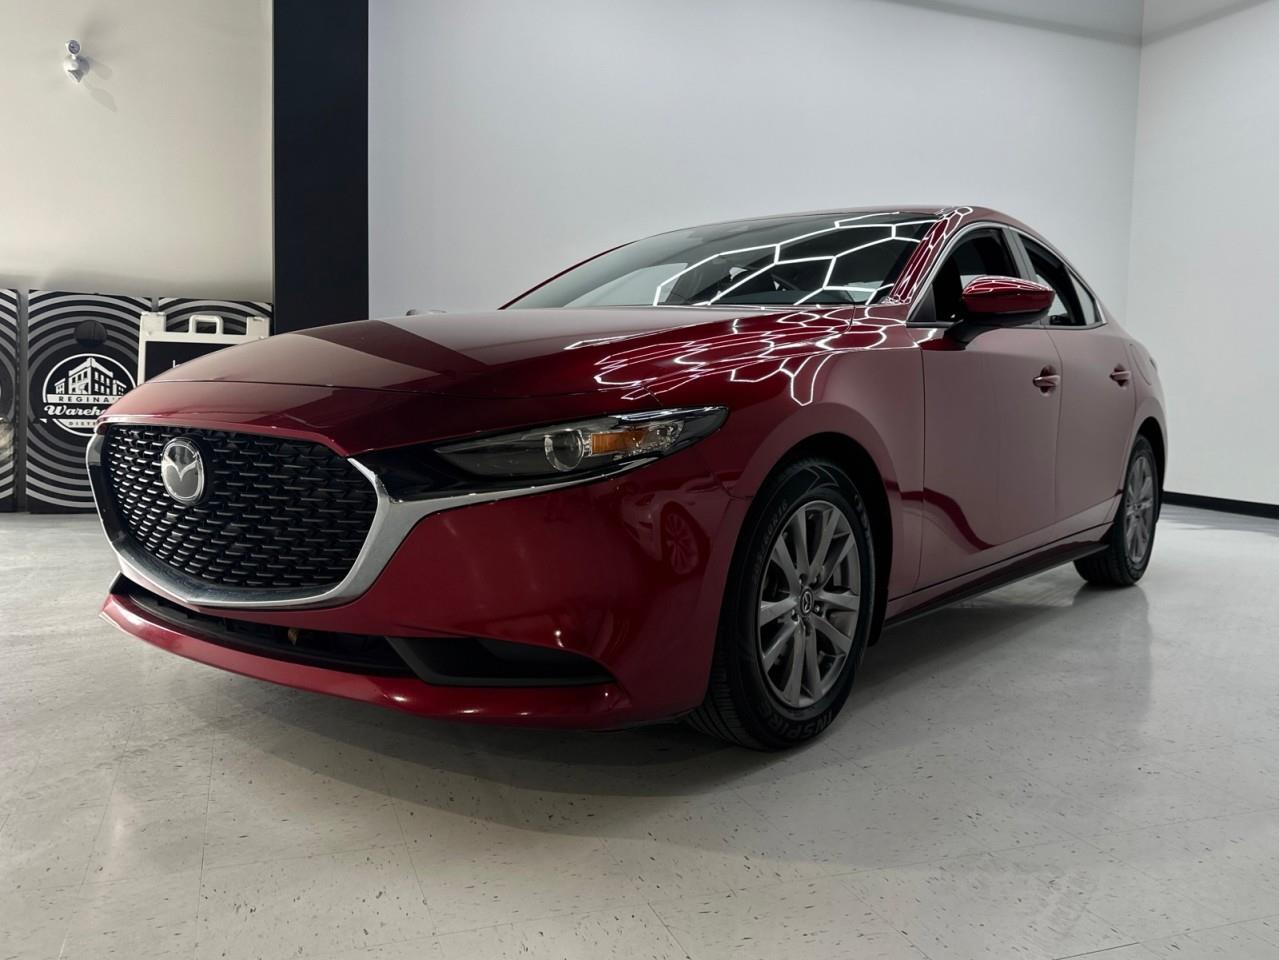 2019 Mazda Mazda3 GS AWD - Apple/Android Car Play - Premium Audio - 